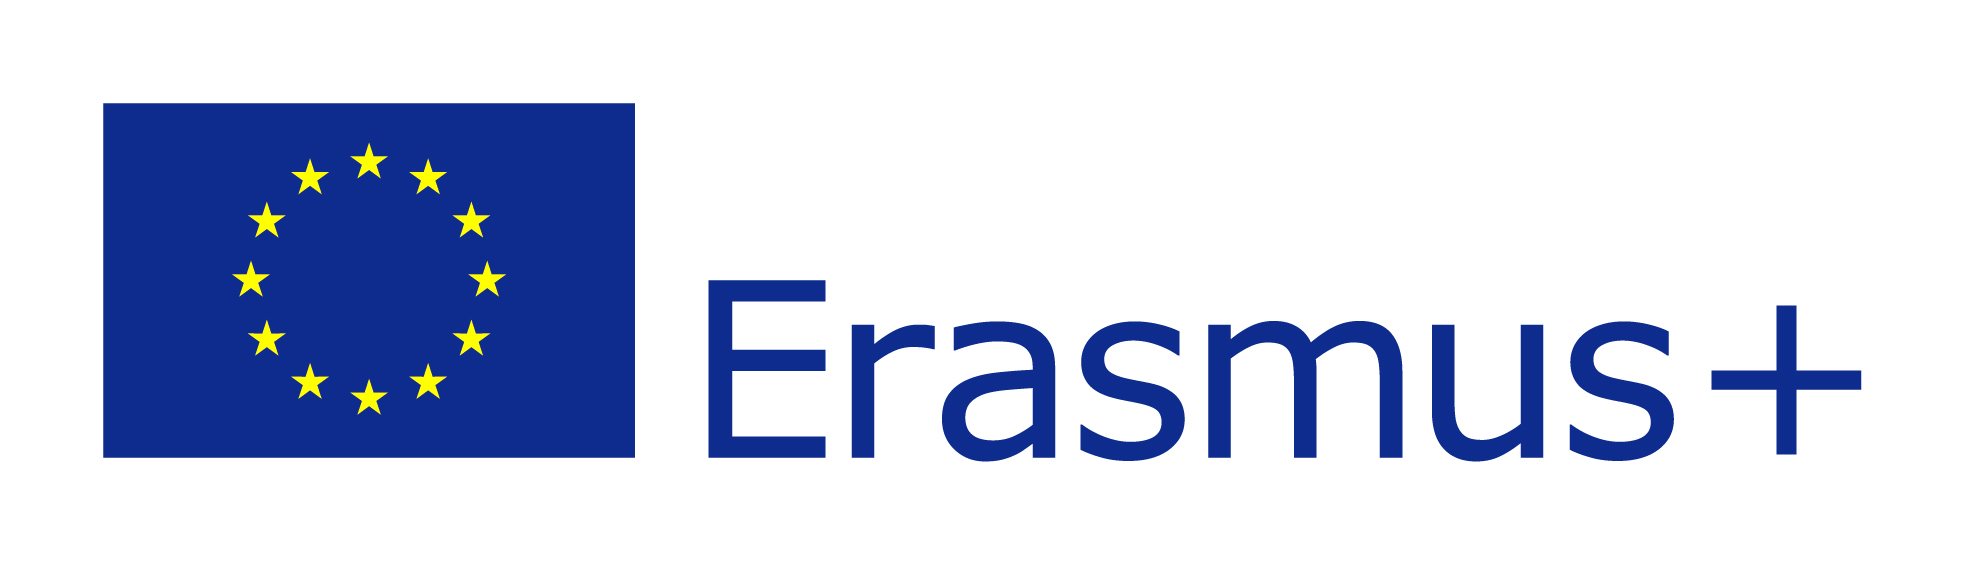 Erasmus+ flag